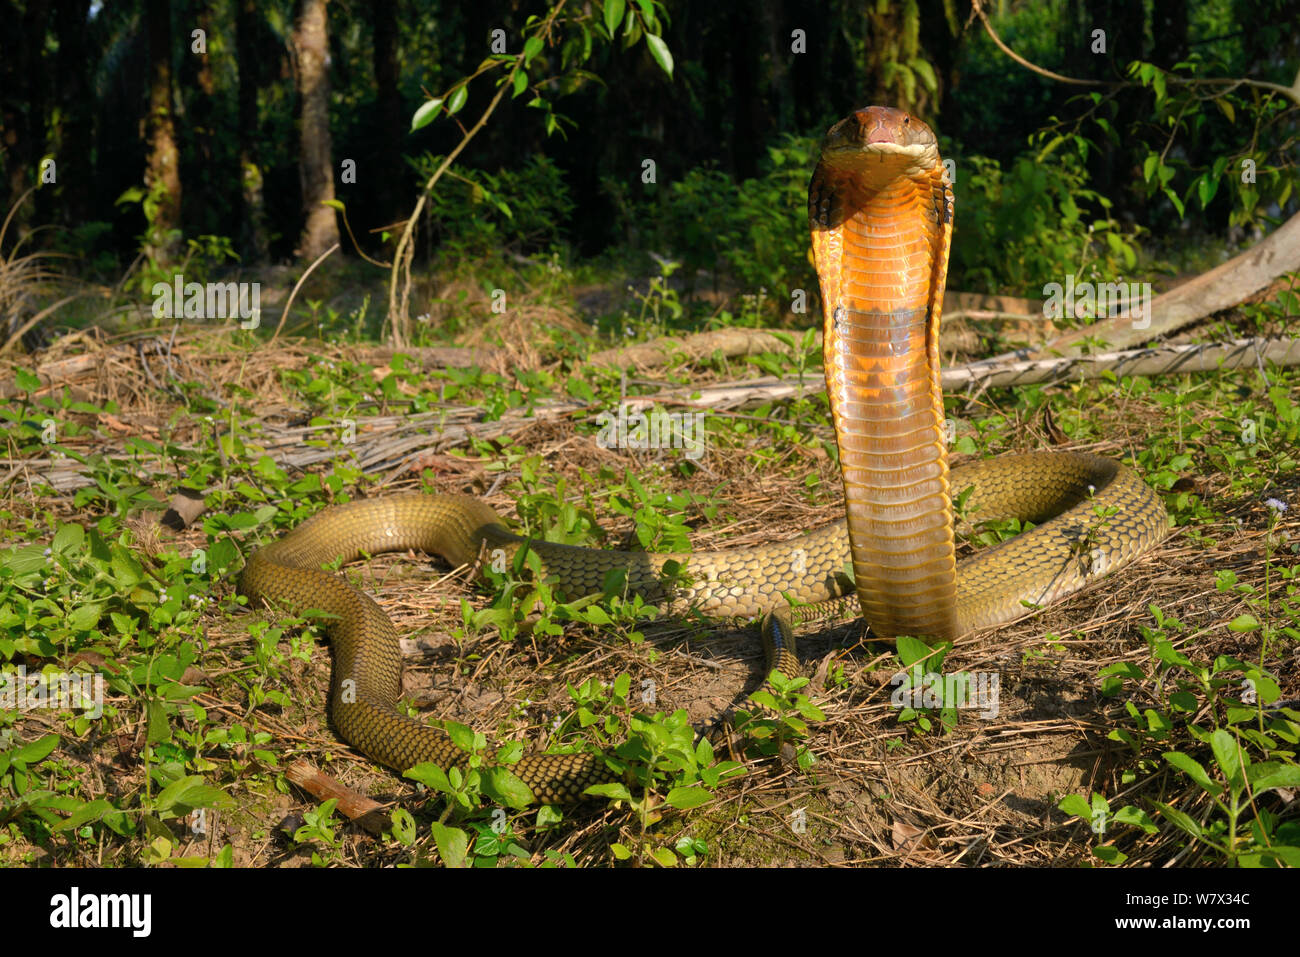 King cobra (Ophiophagus hannah) in strike pose, Malaysia Stock Photo